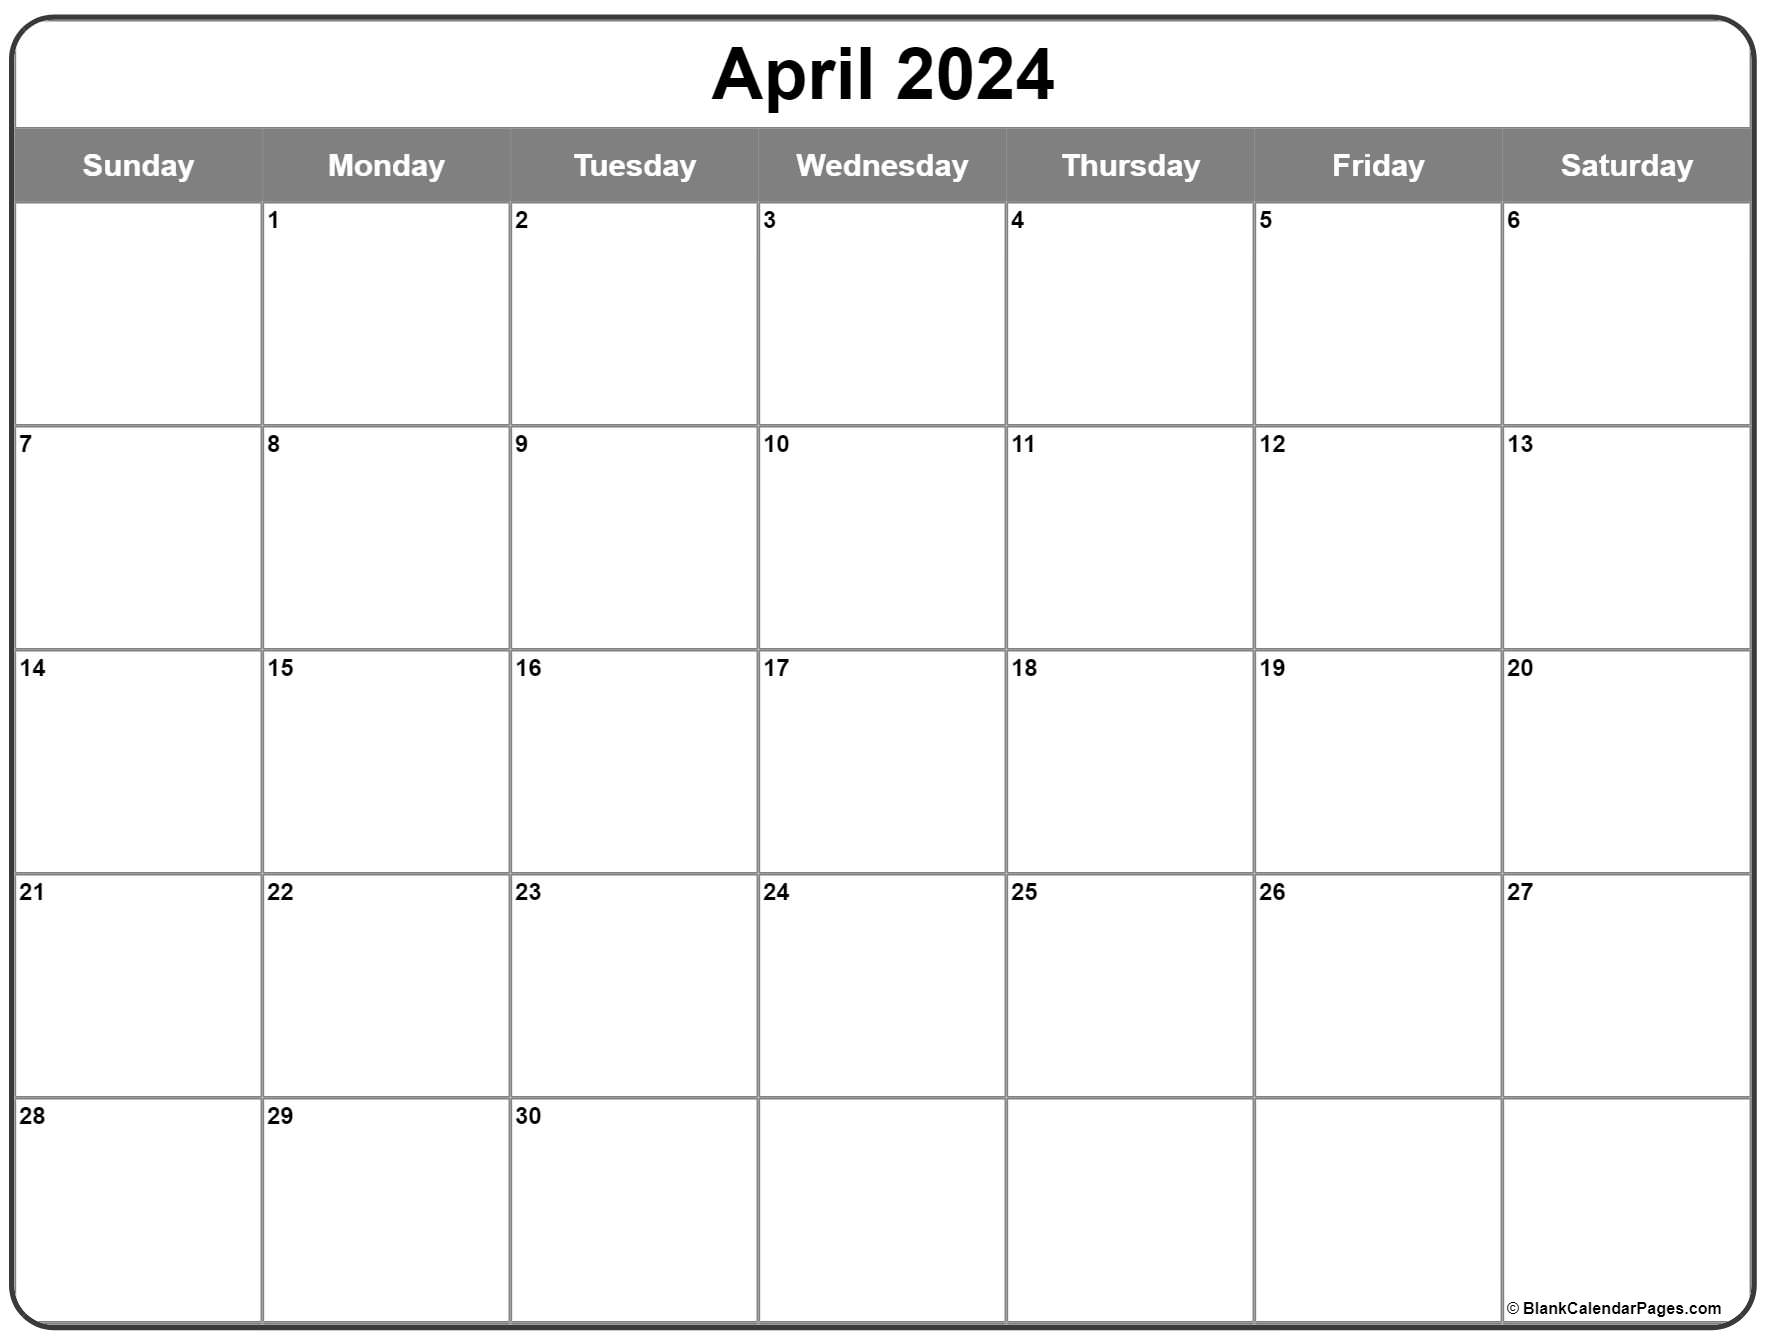 apr-2023-calendar-printable-free